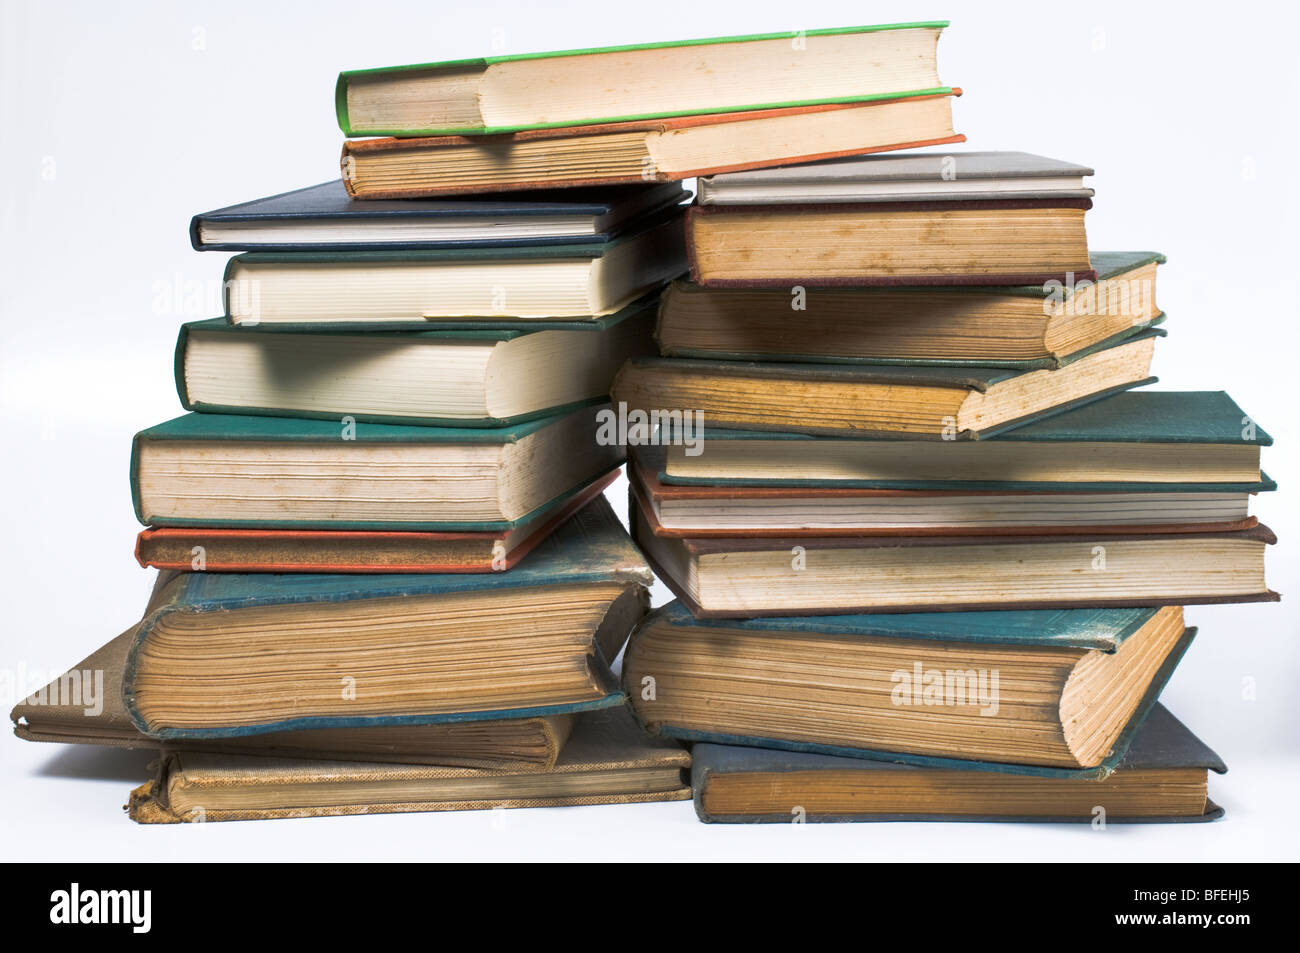 A pile of old hardback books Stock Photo